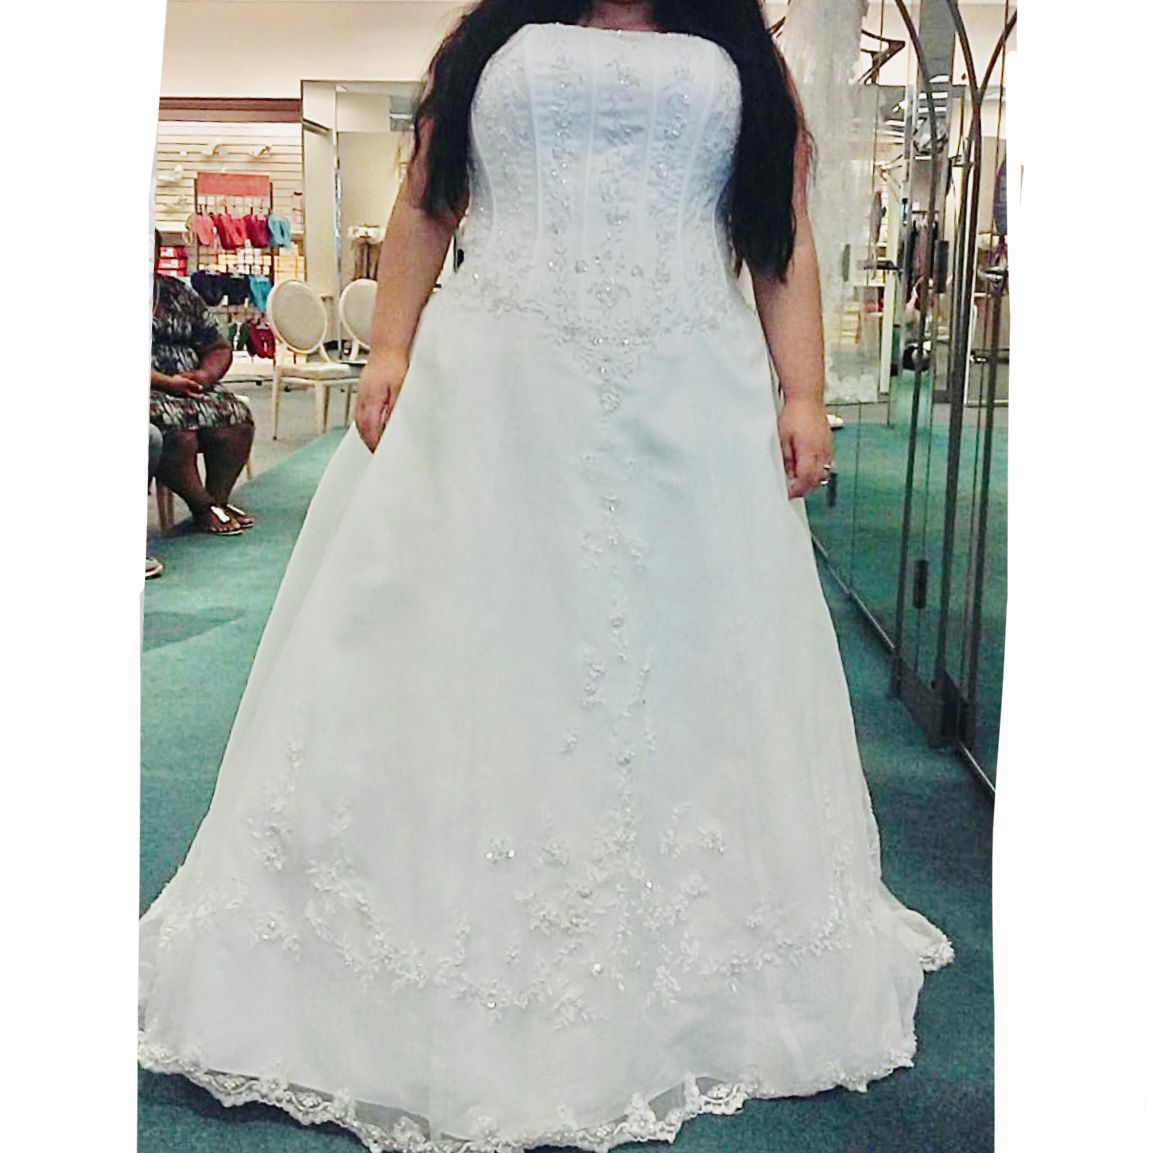 David’s Bridal White Wedding Dress Size 20 With Preserve Box